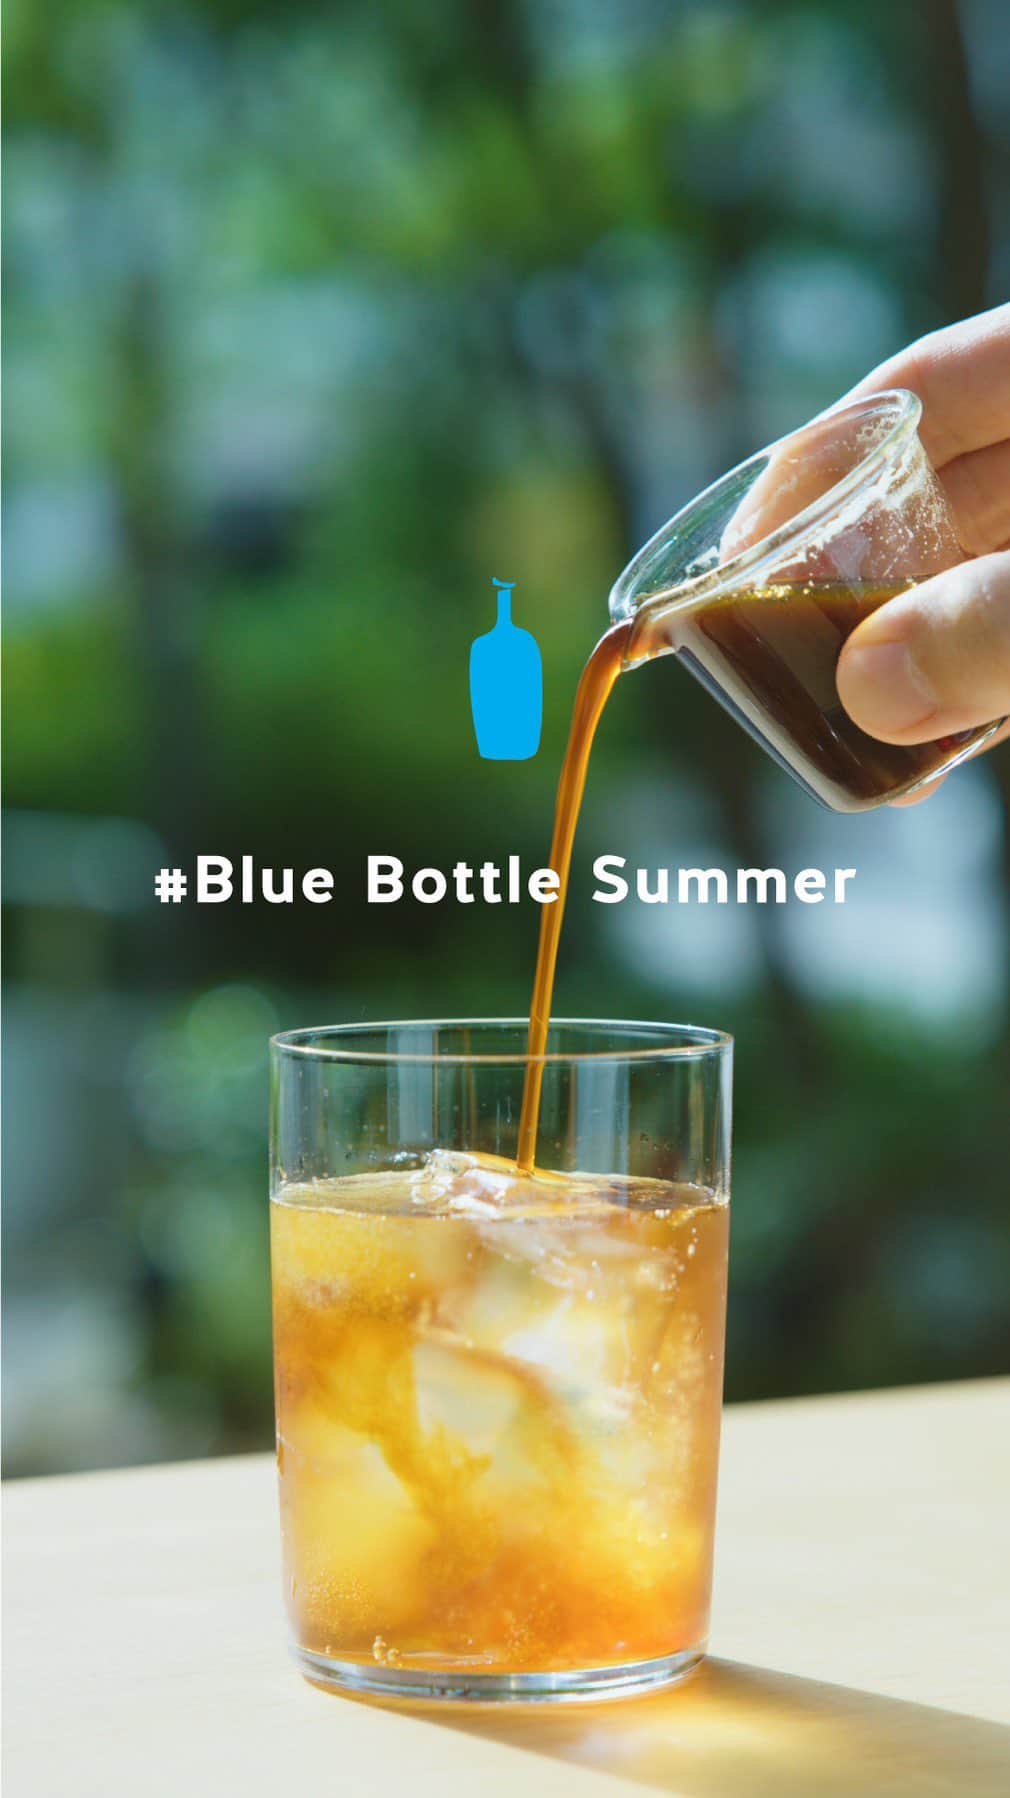 Blue Bottle Coffee Japanのインスタグラム